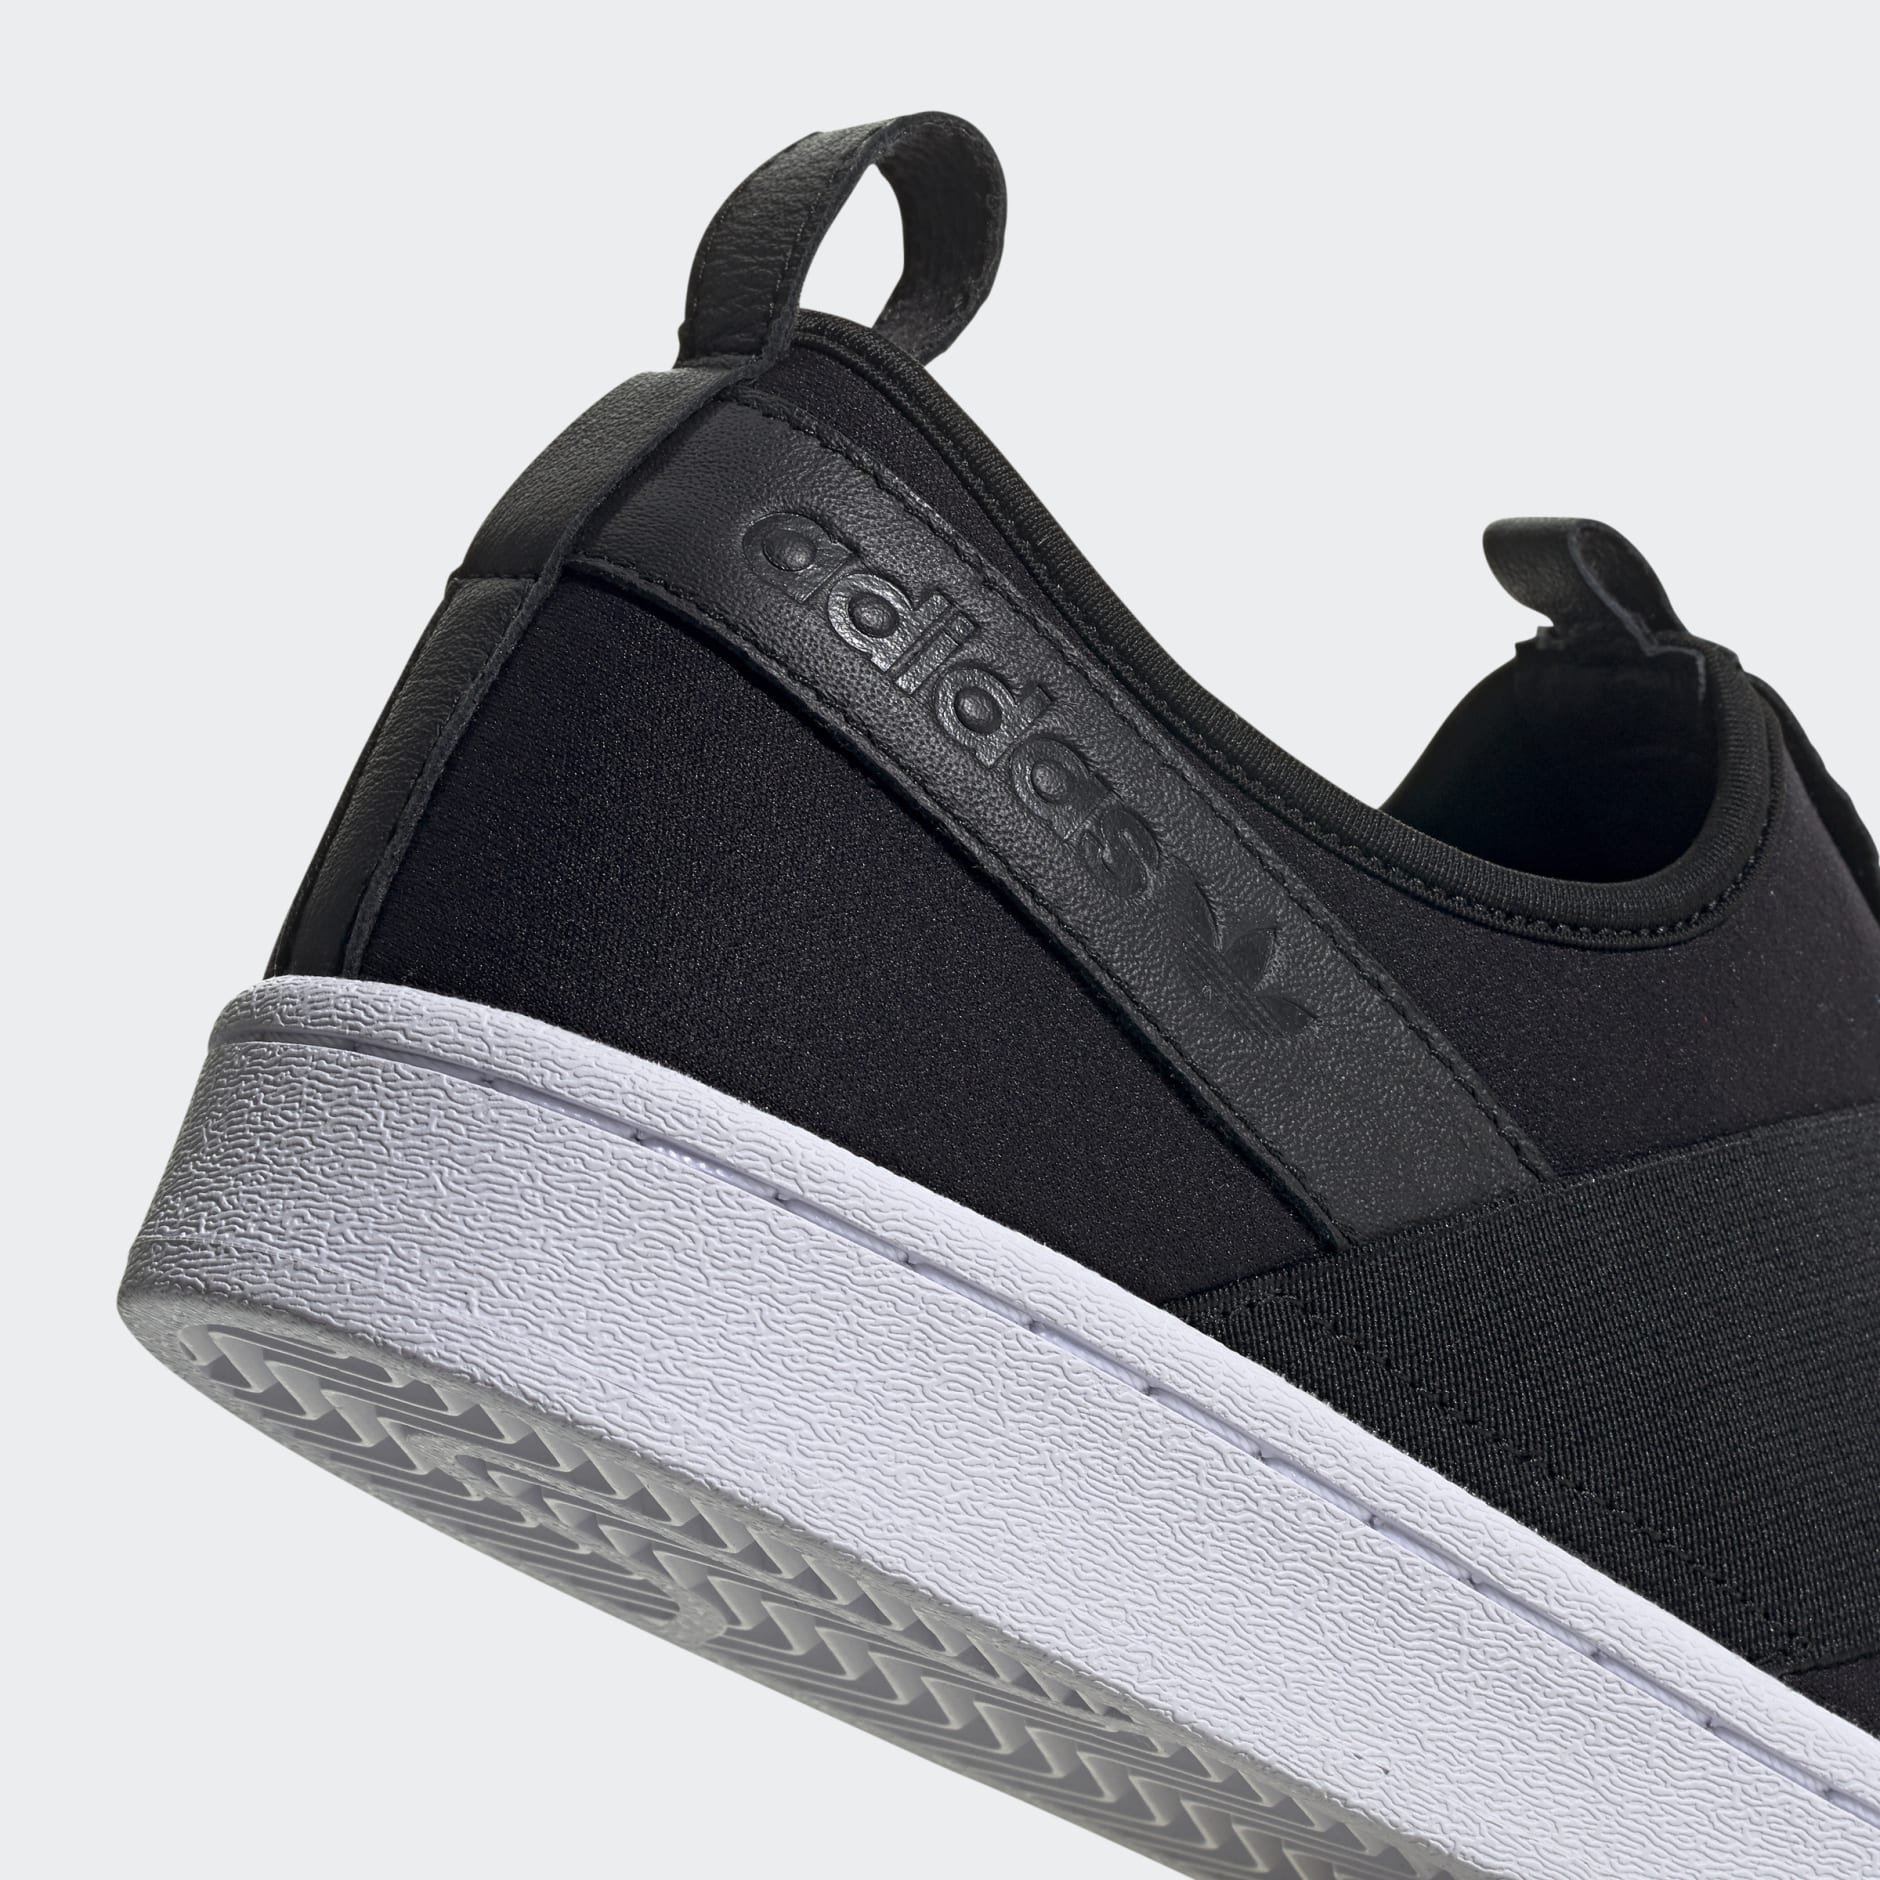 Intuition Formen Anzai adidas Superstar Slip-On Shoes - Black | adidas KW